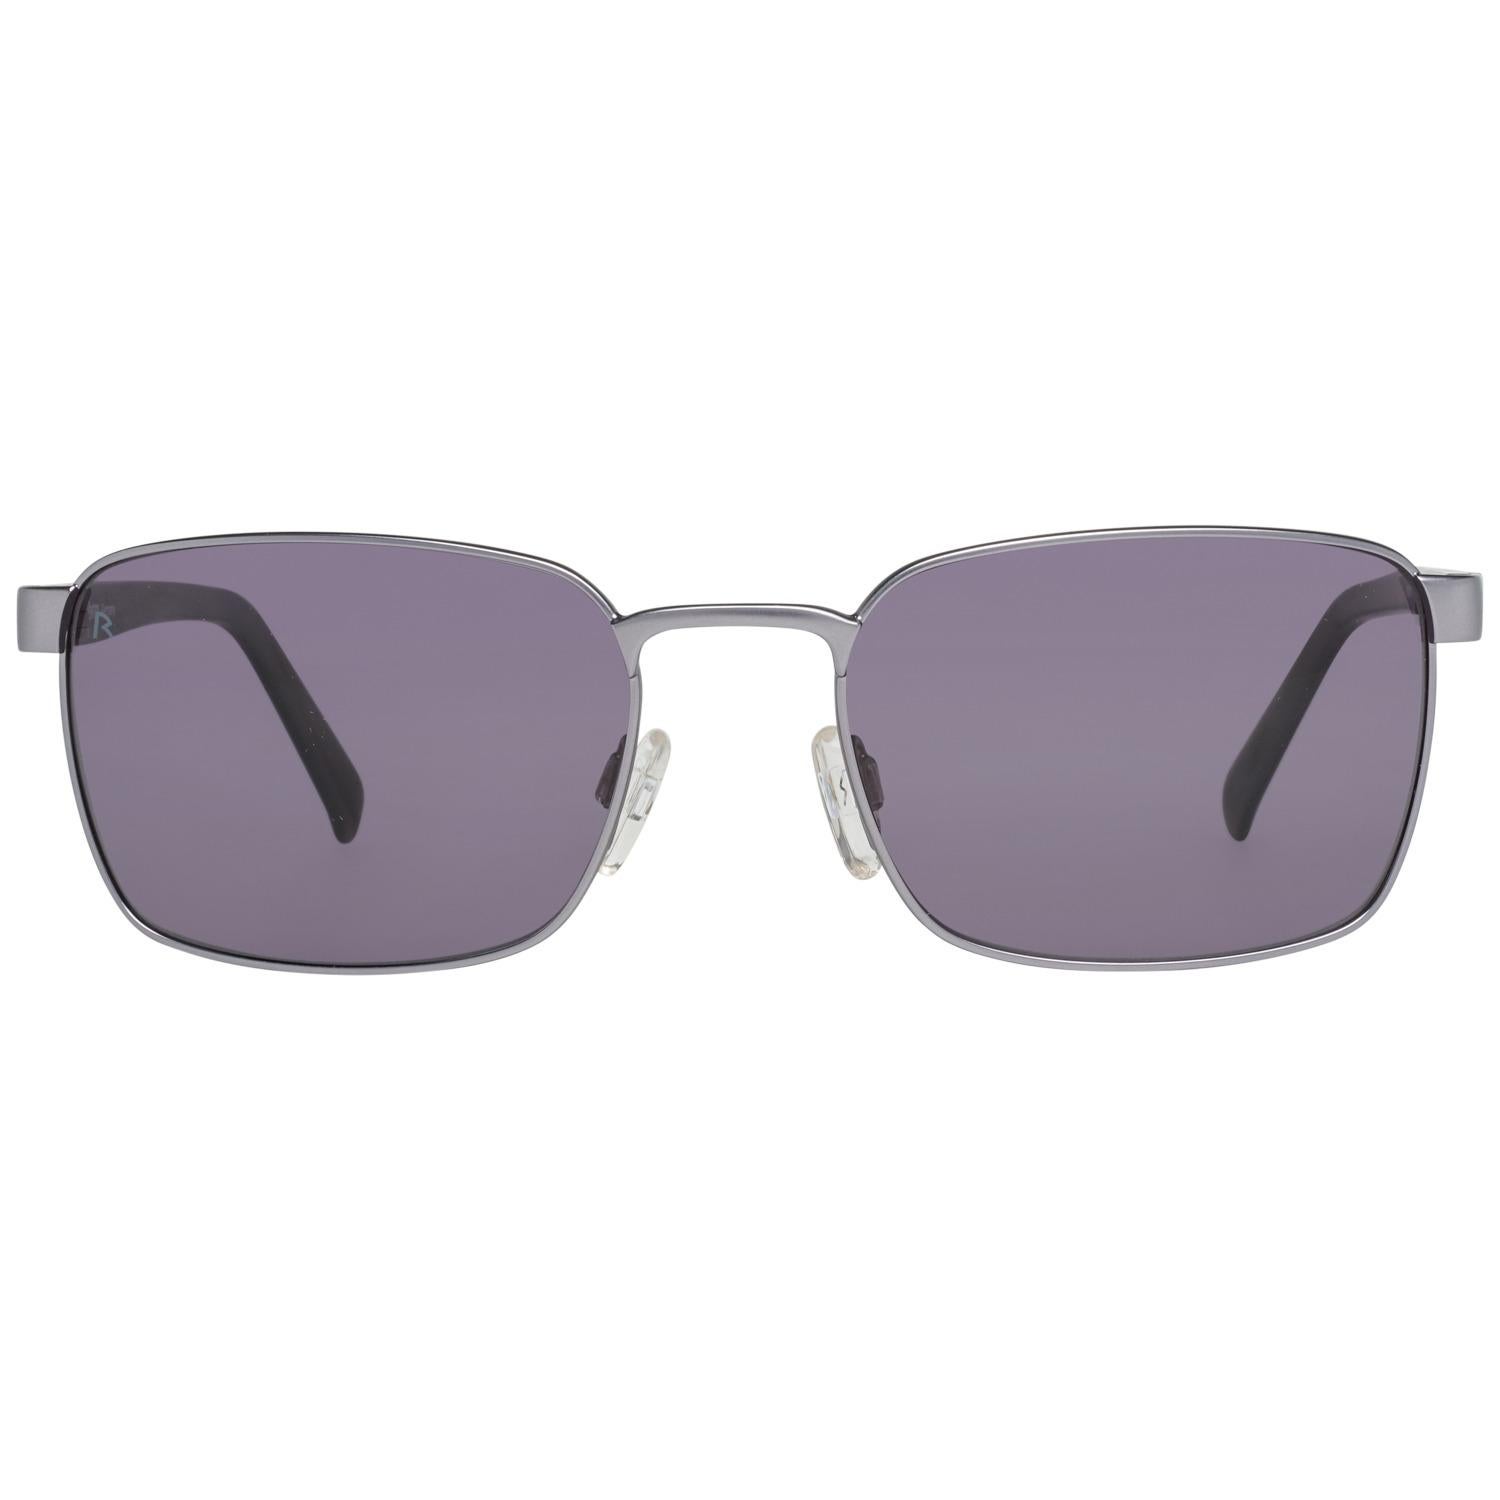 Rodenstock Mint Unisex Silver Sunglasses R1417 D 56 56-19-140 mm 1